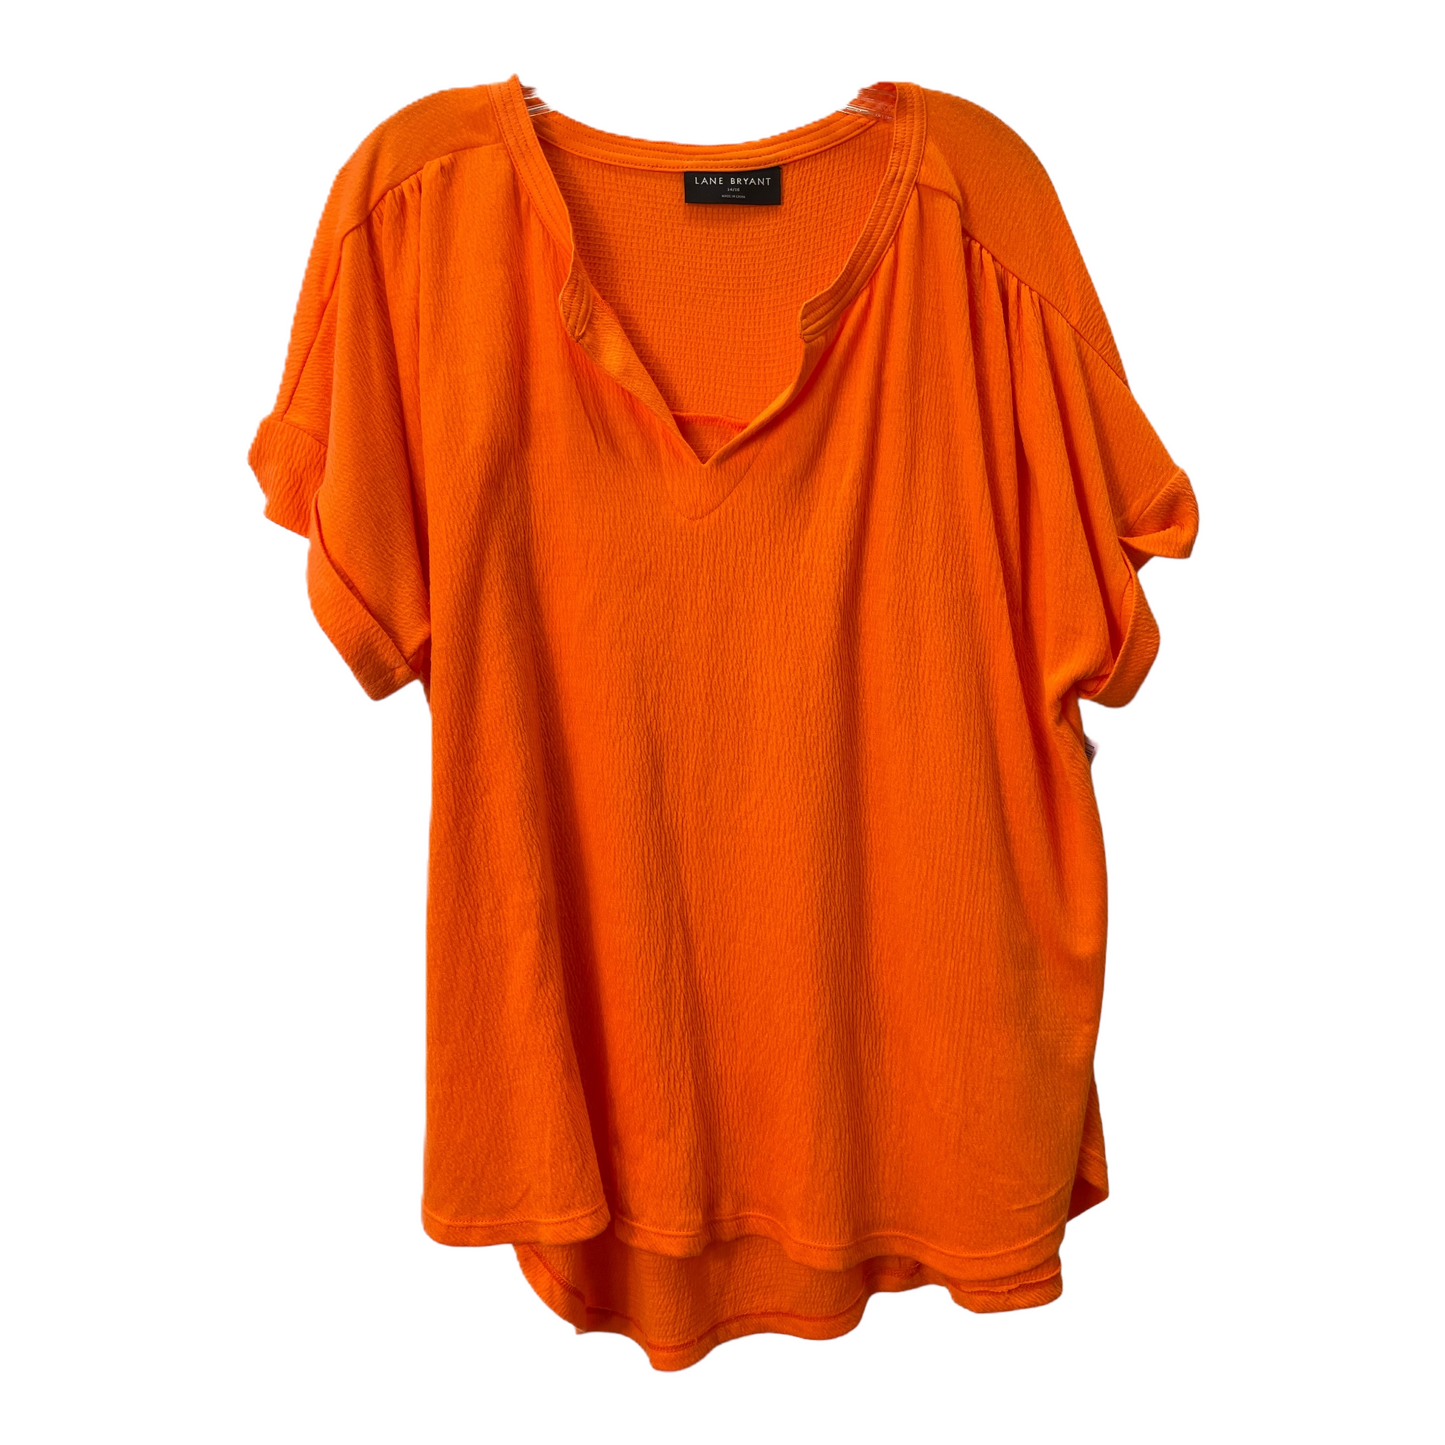 Orange Top Short Sleeve By Lane Bryant, Size: 1x